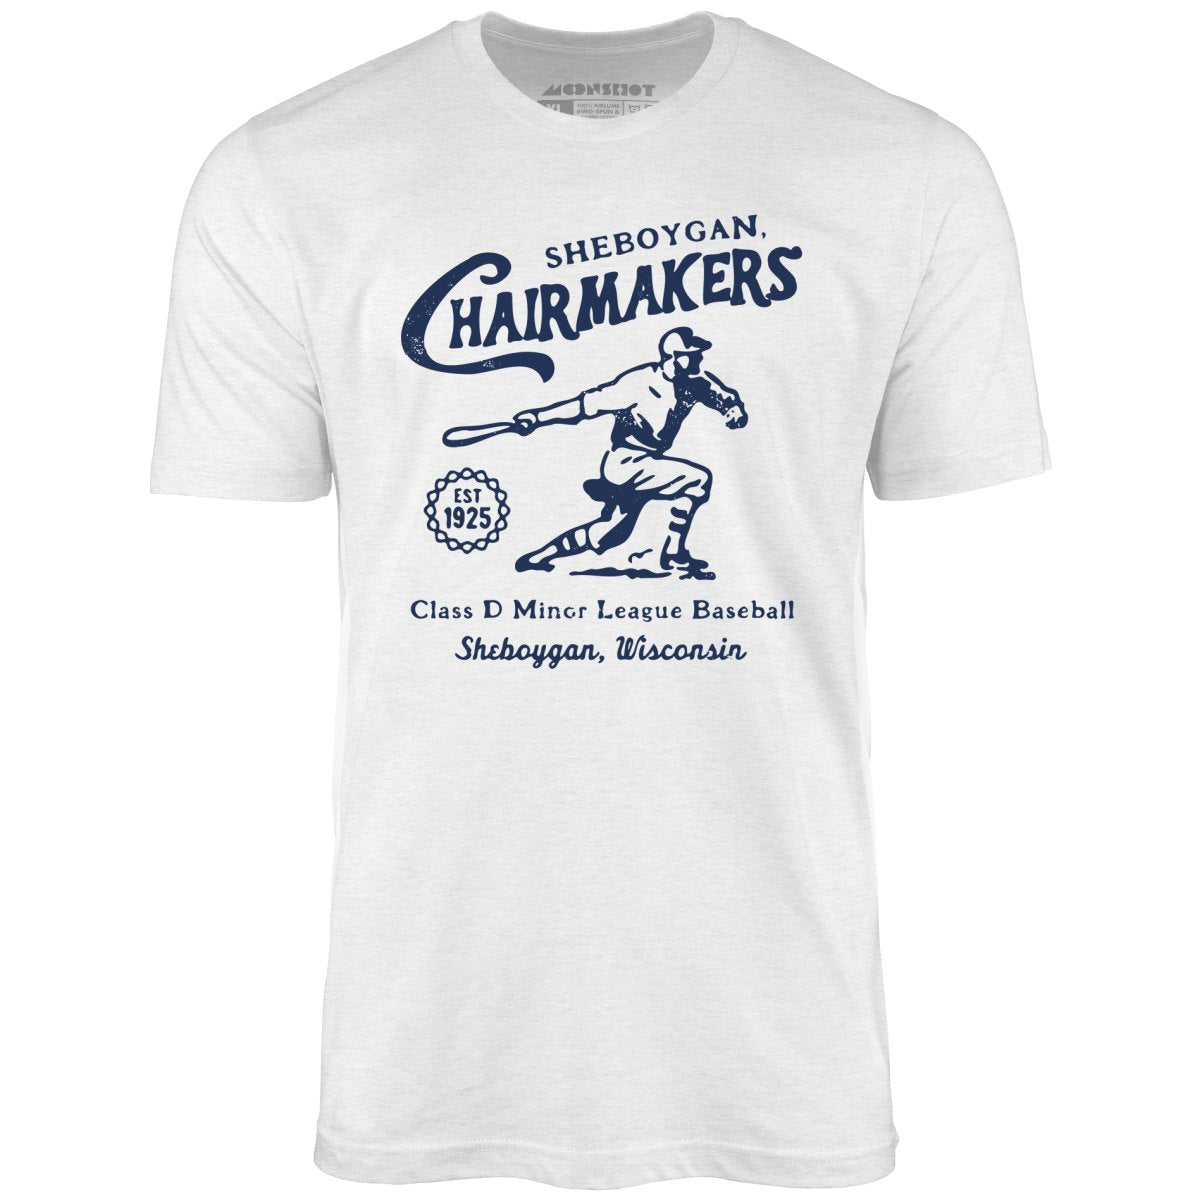 Sheboygan Chairmakers - Wisconsin - Vintage Defunct Baseball Teams - Unisex T-Shirt